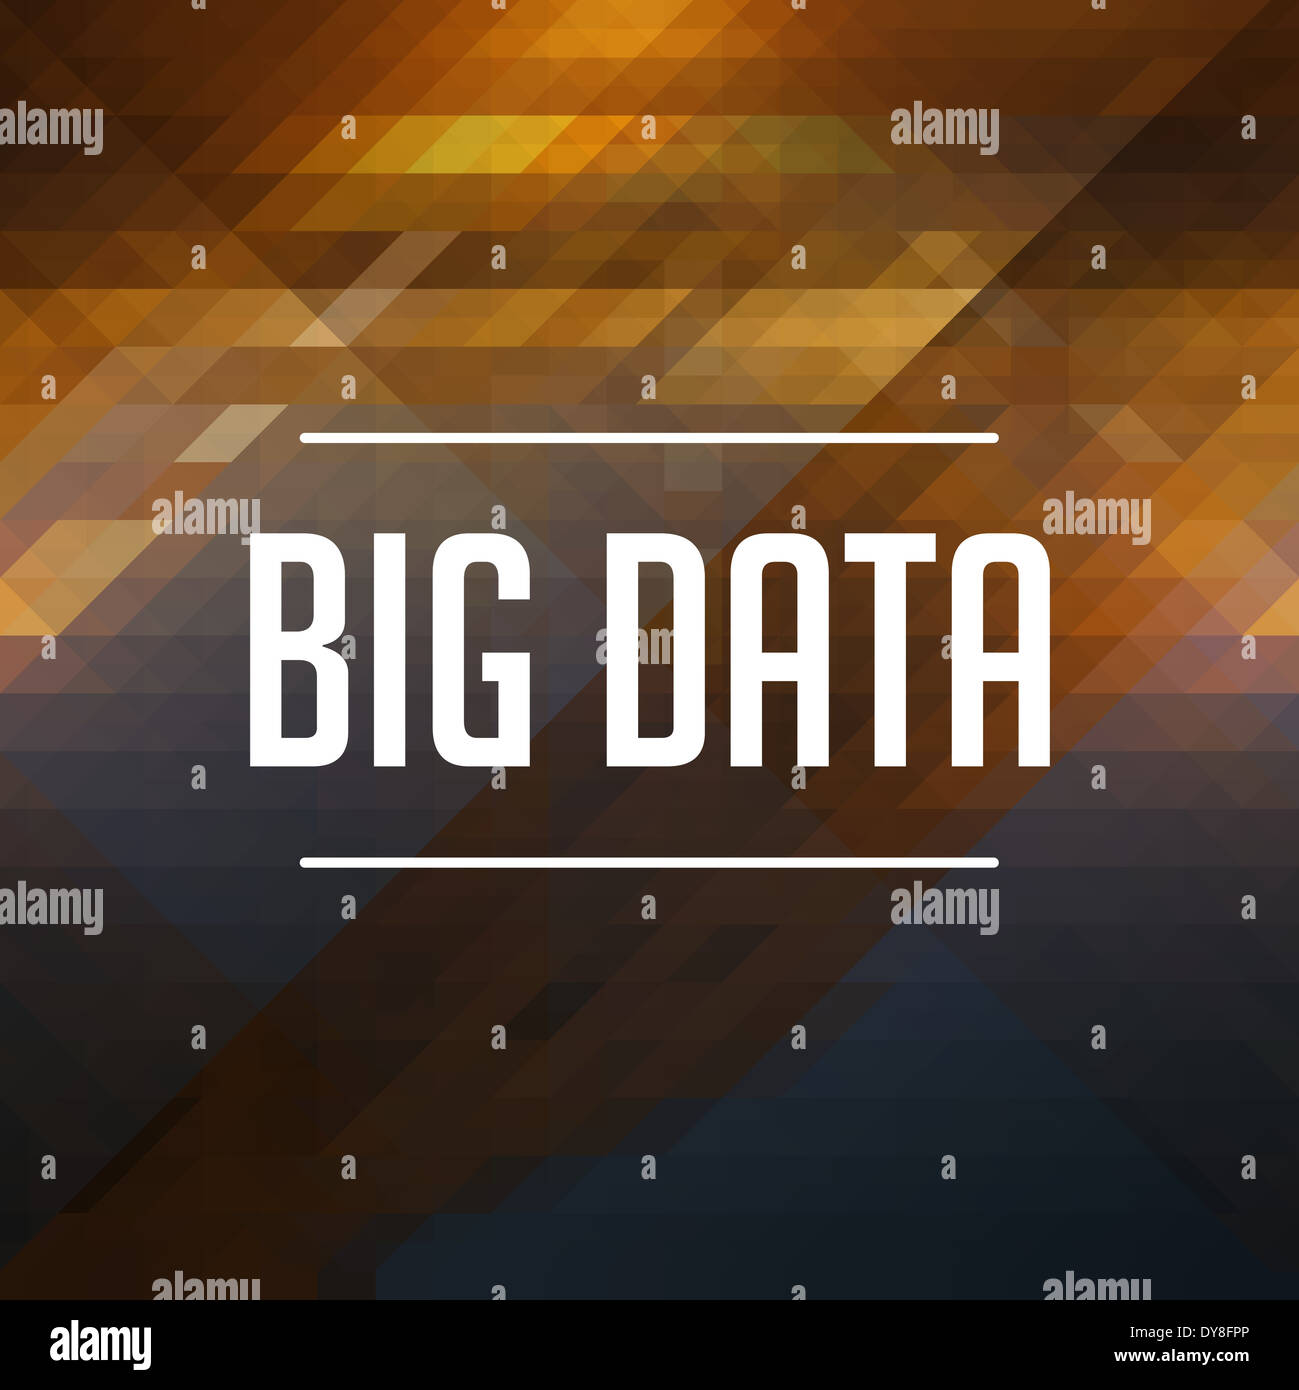 Big Data Concept on Retro Triangle Background. Stock Photo